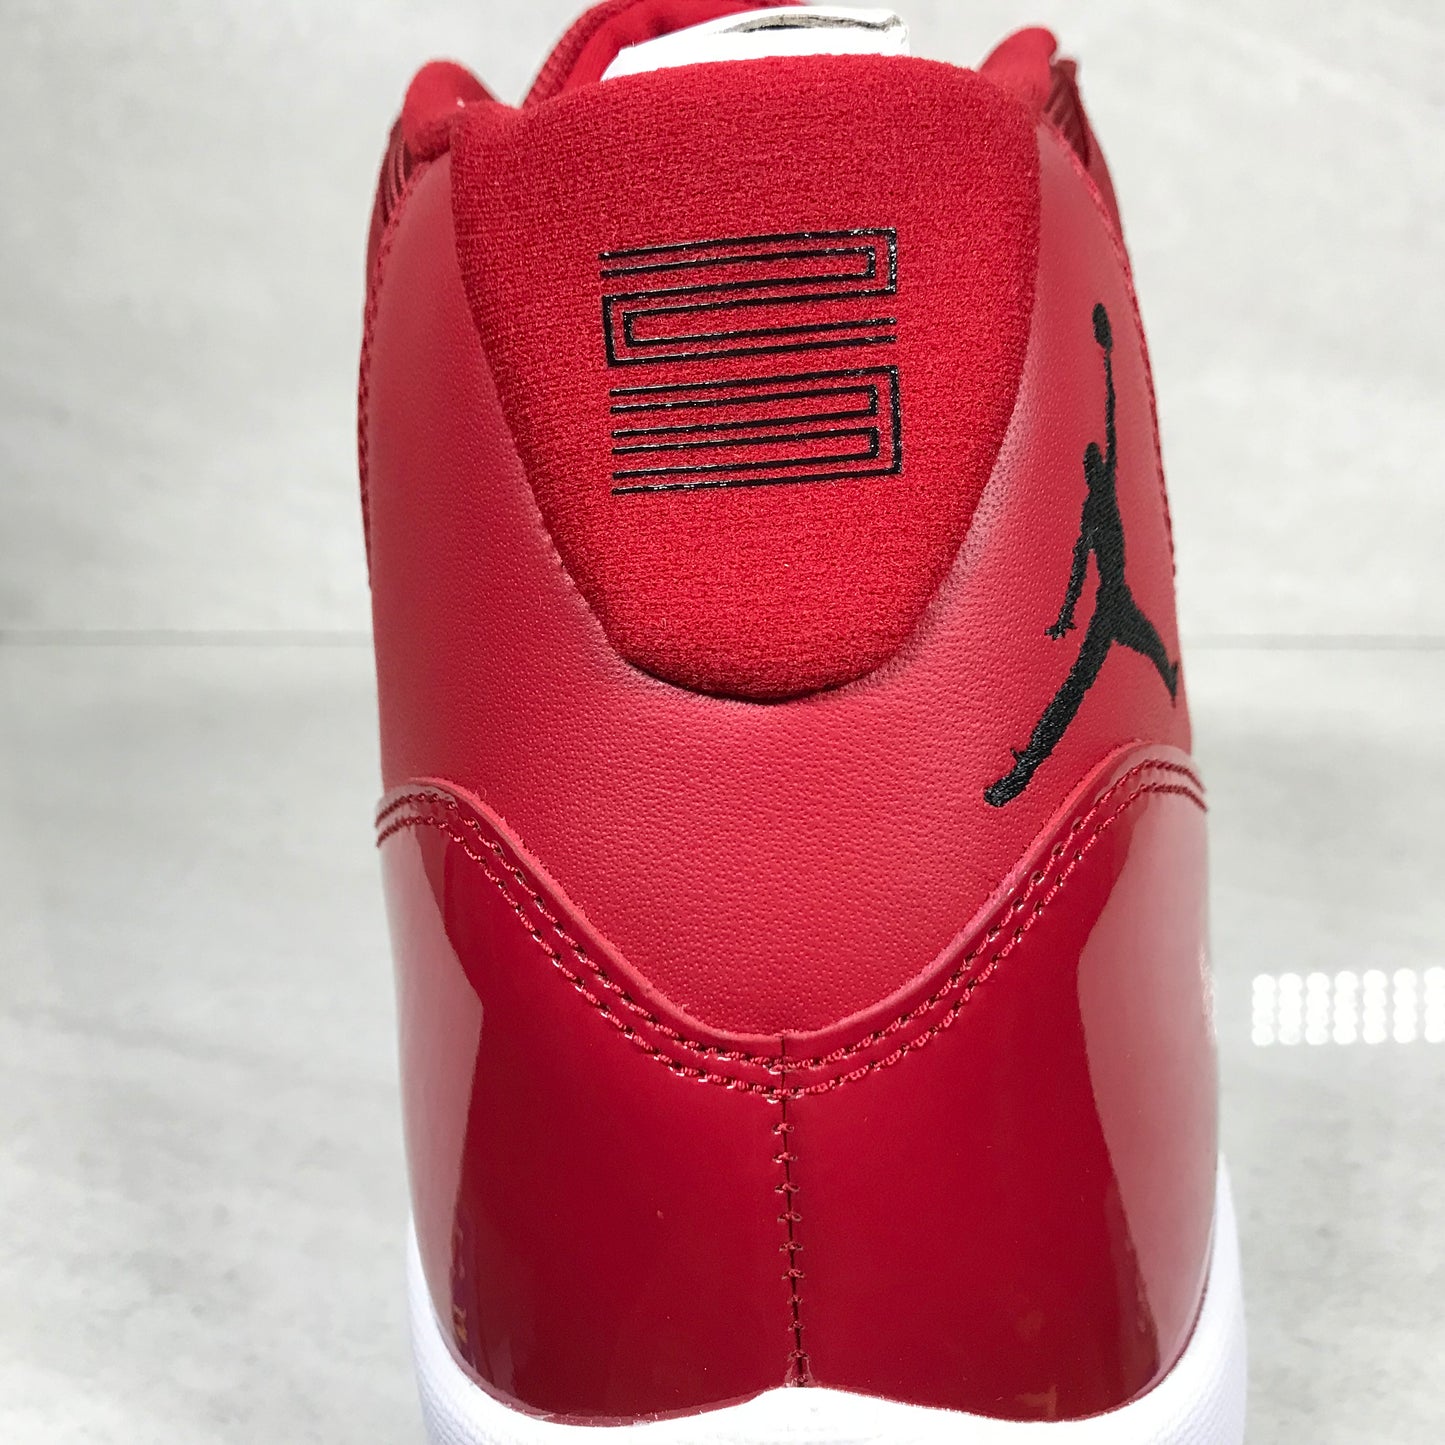 Air Jordan 11 XI Retro Win Like 96 - 378037-623 - Men's Size 8.5/Size 9/Size 10